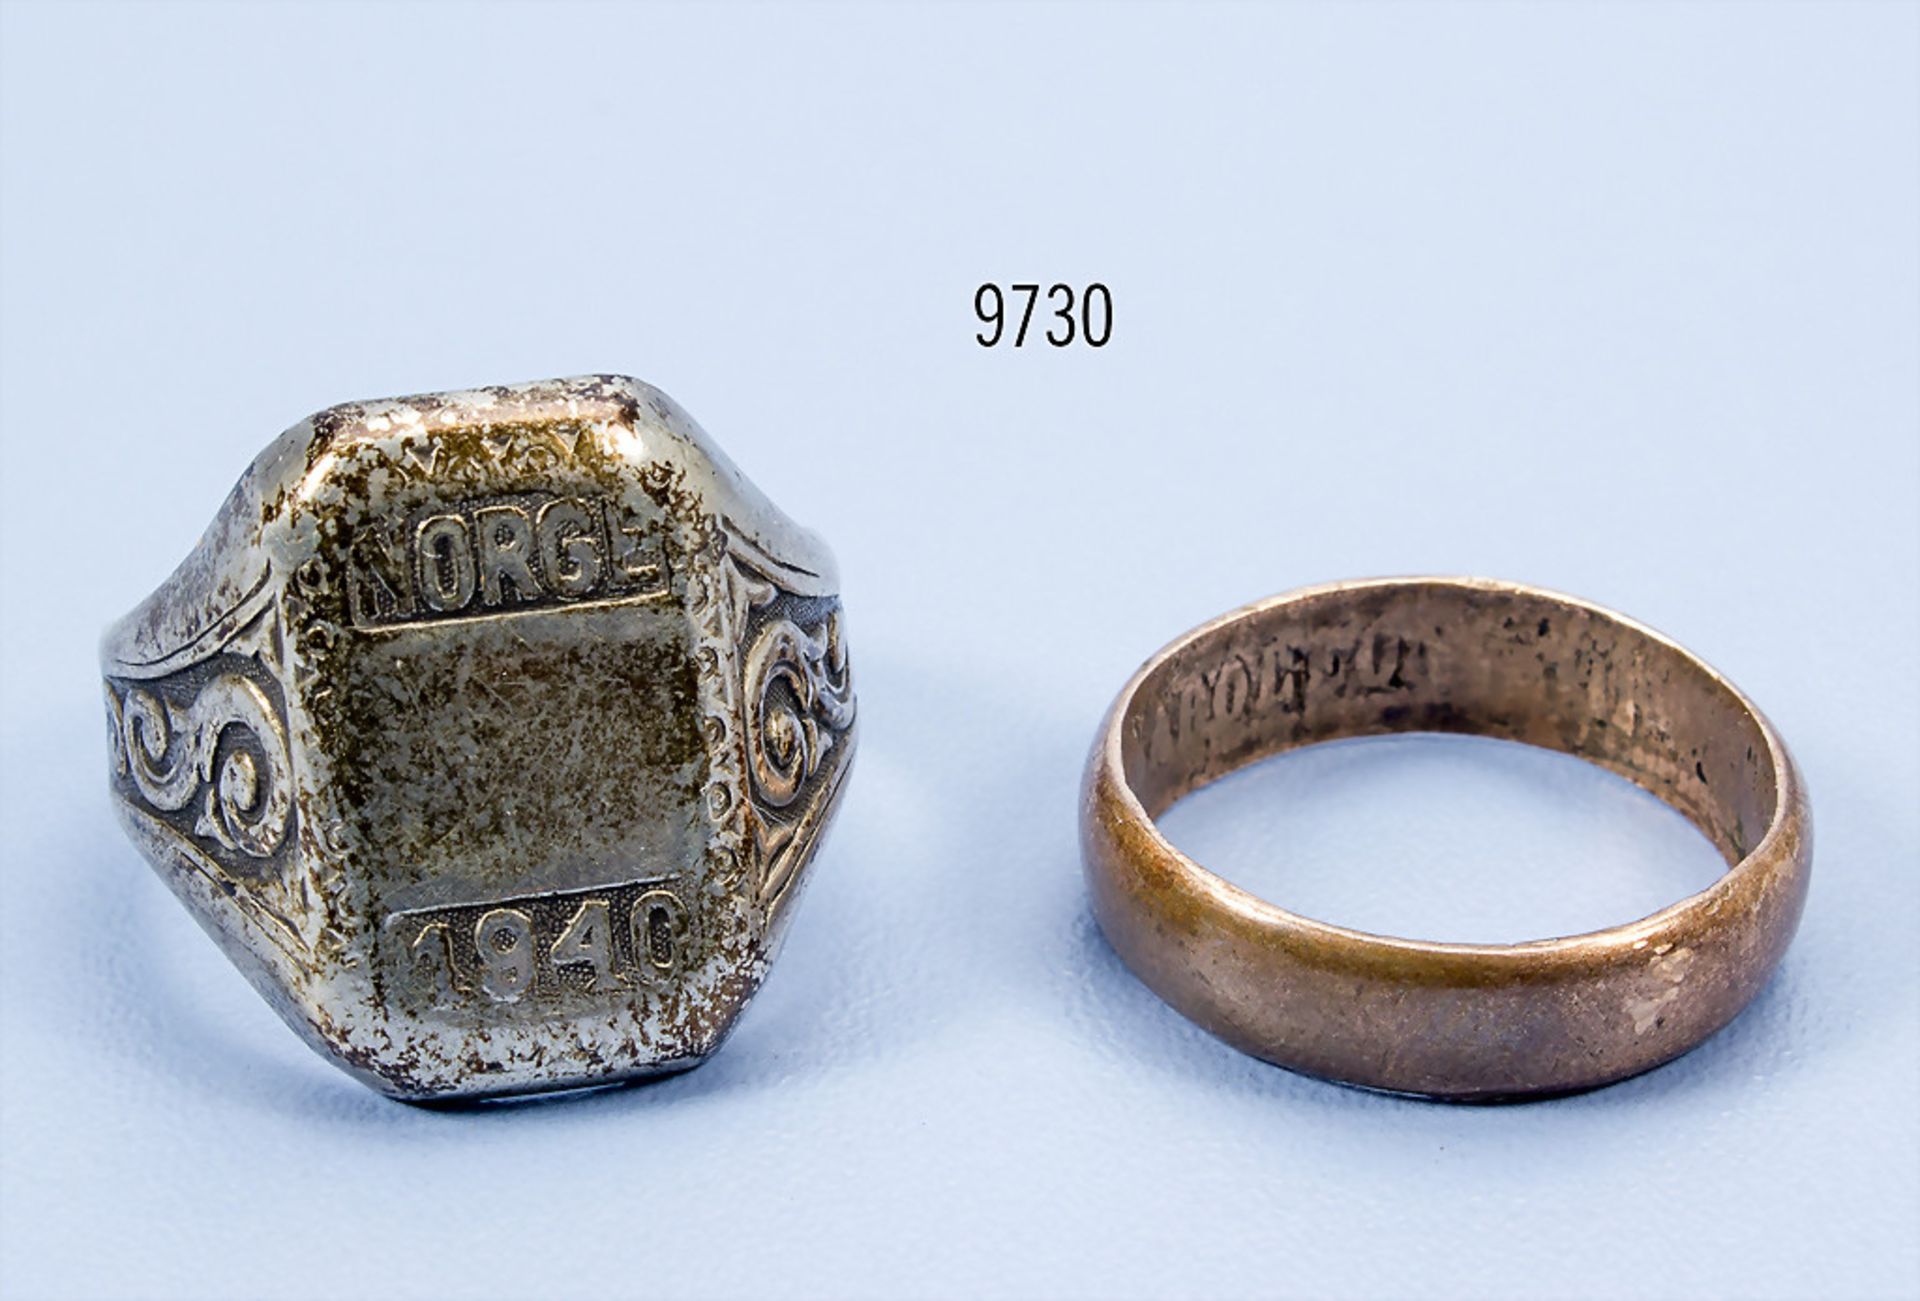 Konv. 2 Ringe, Silberring mit Punze "E. C. 830" und "Norge 1940" sowie Messingring, Innen